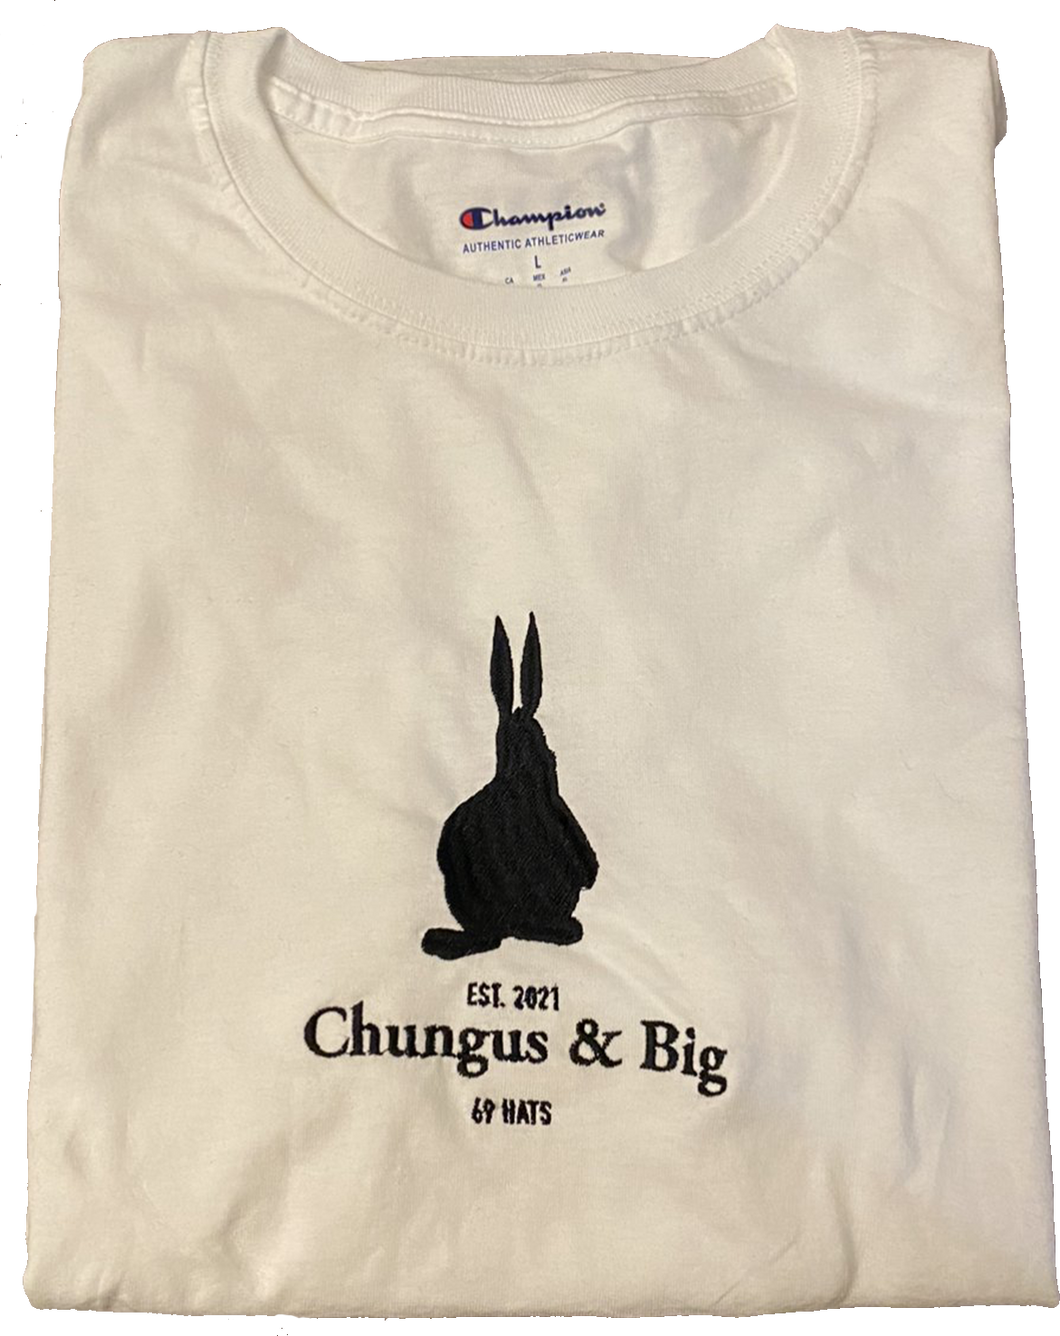 Chungus & Big Shirt - White